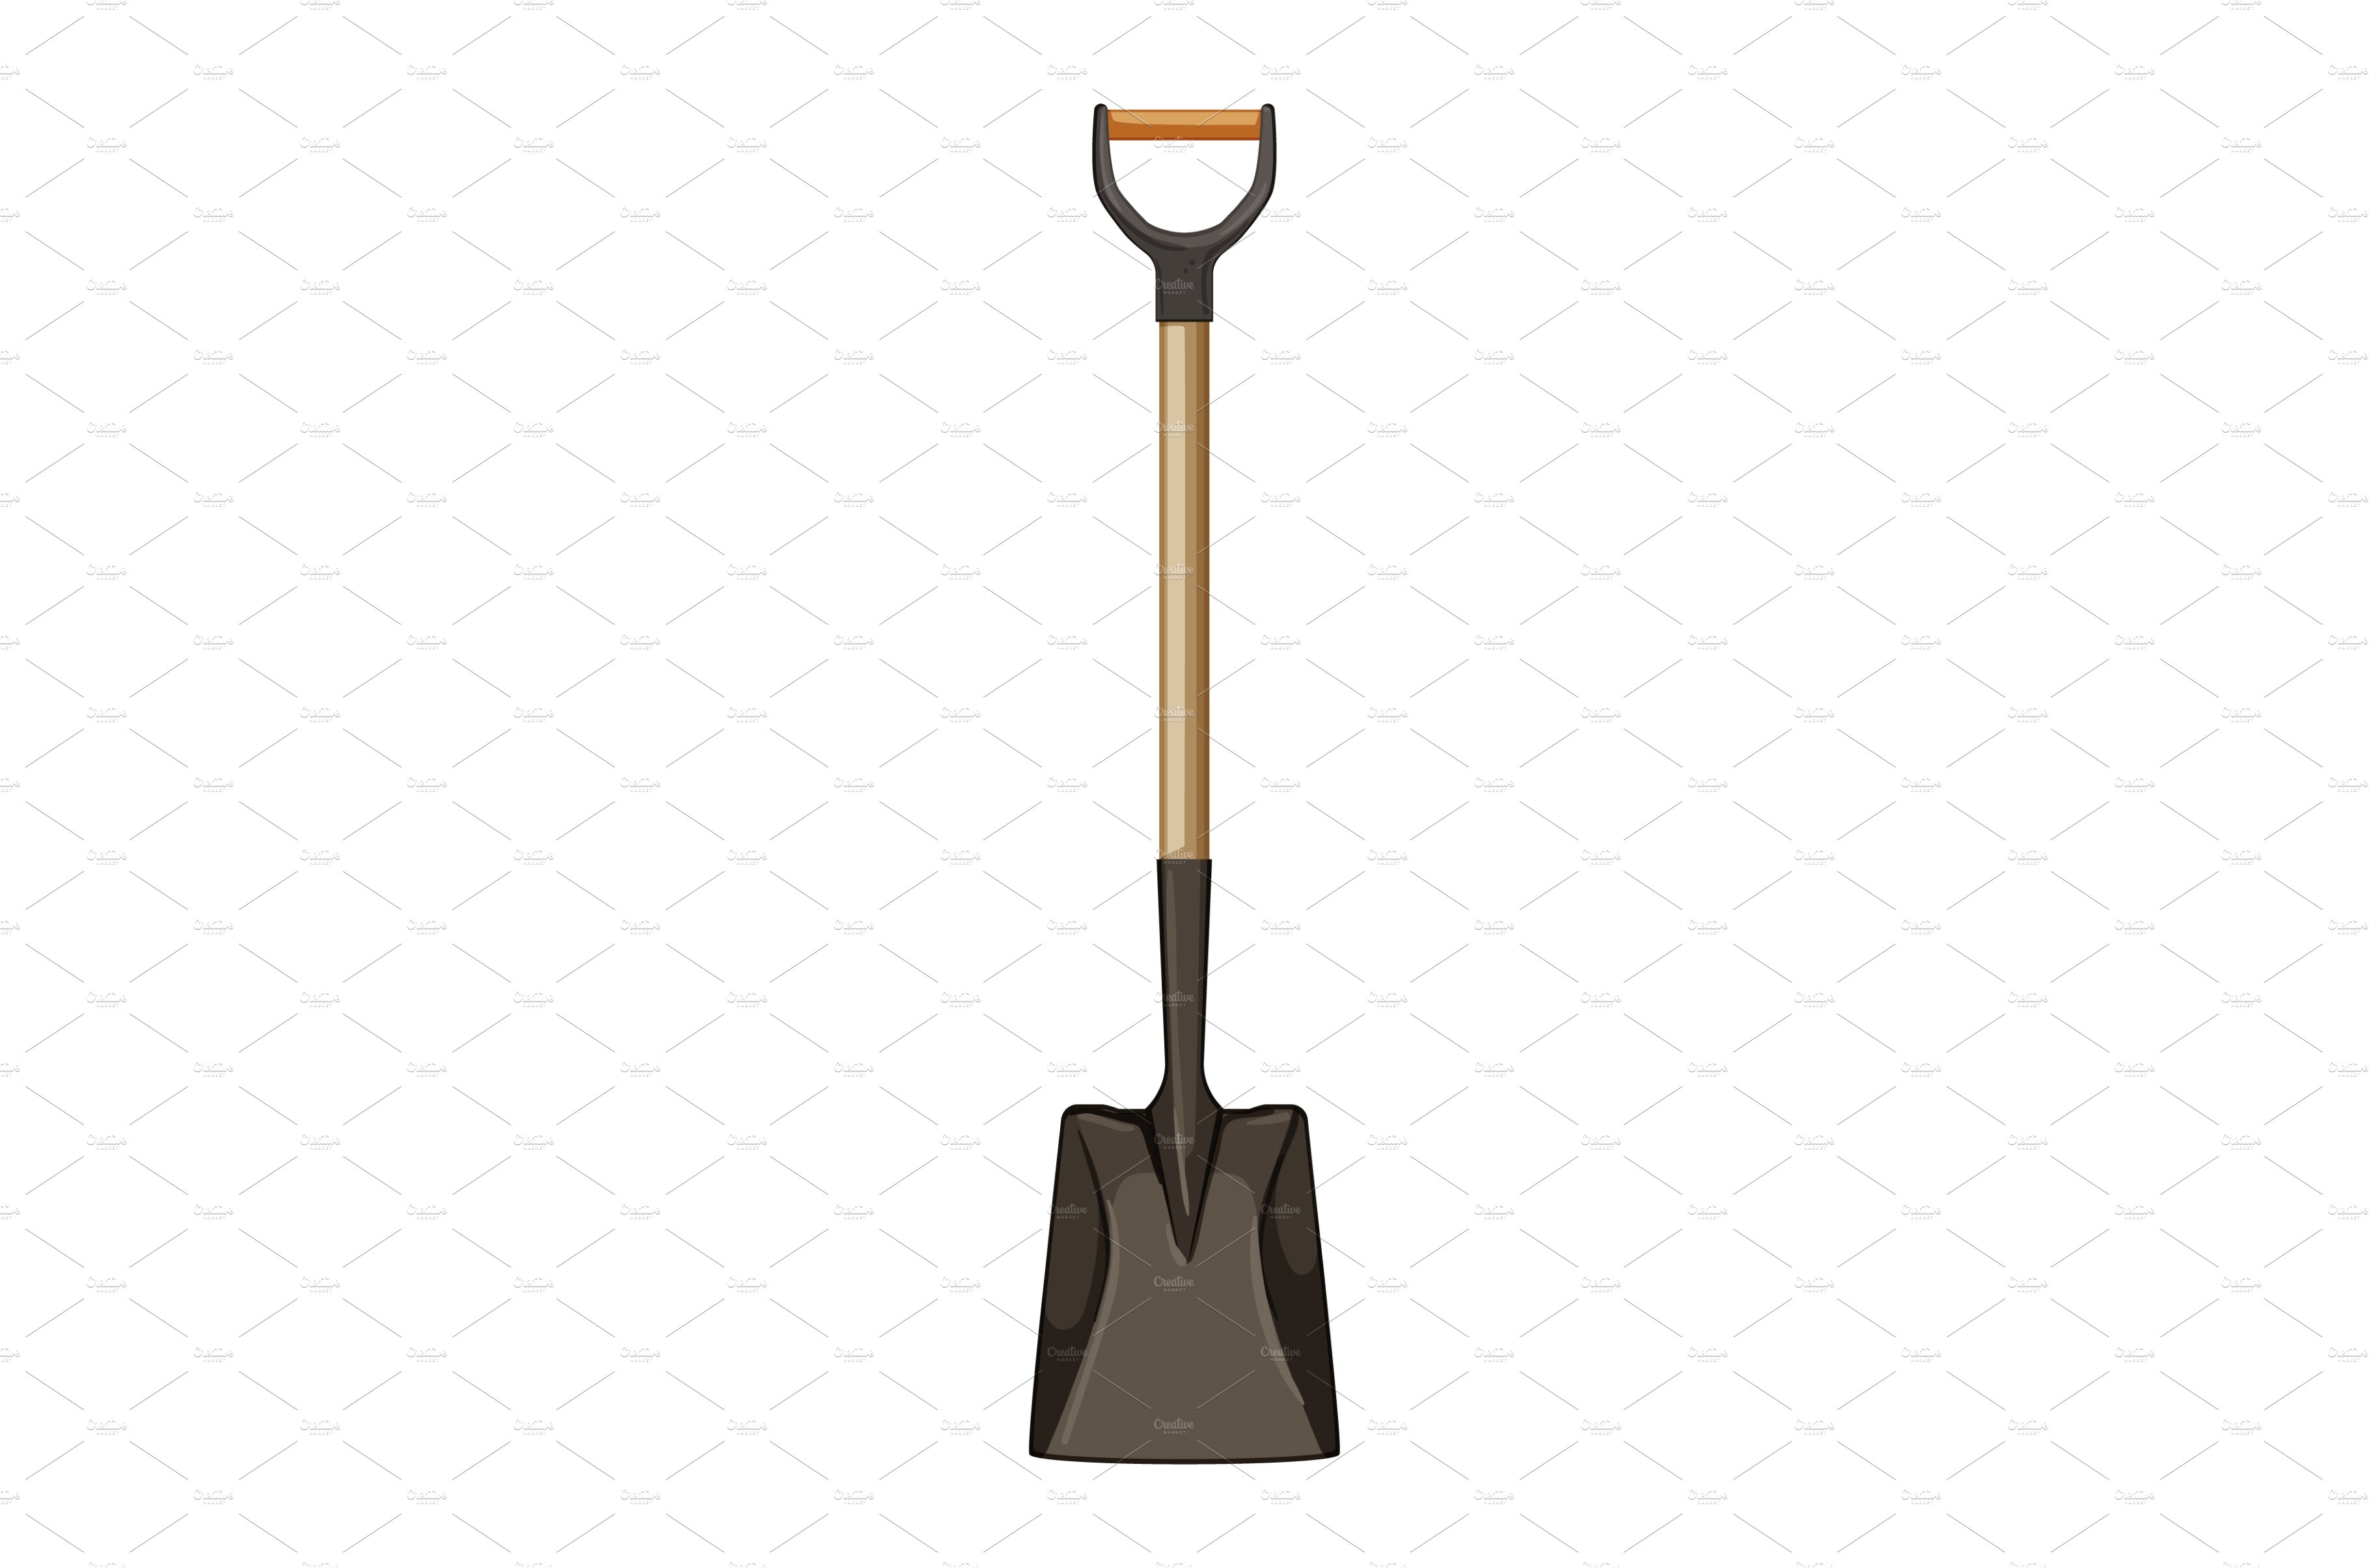 steel shovel tool cartoon vector cover image.